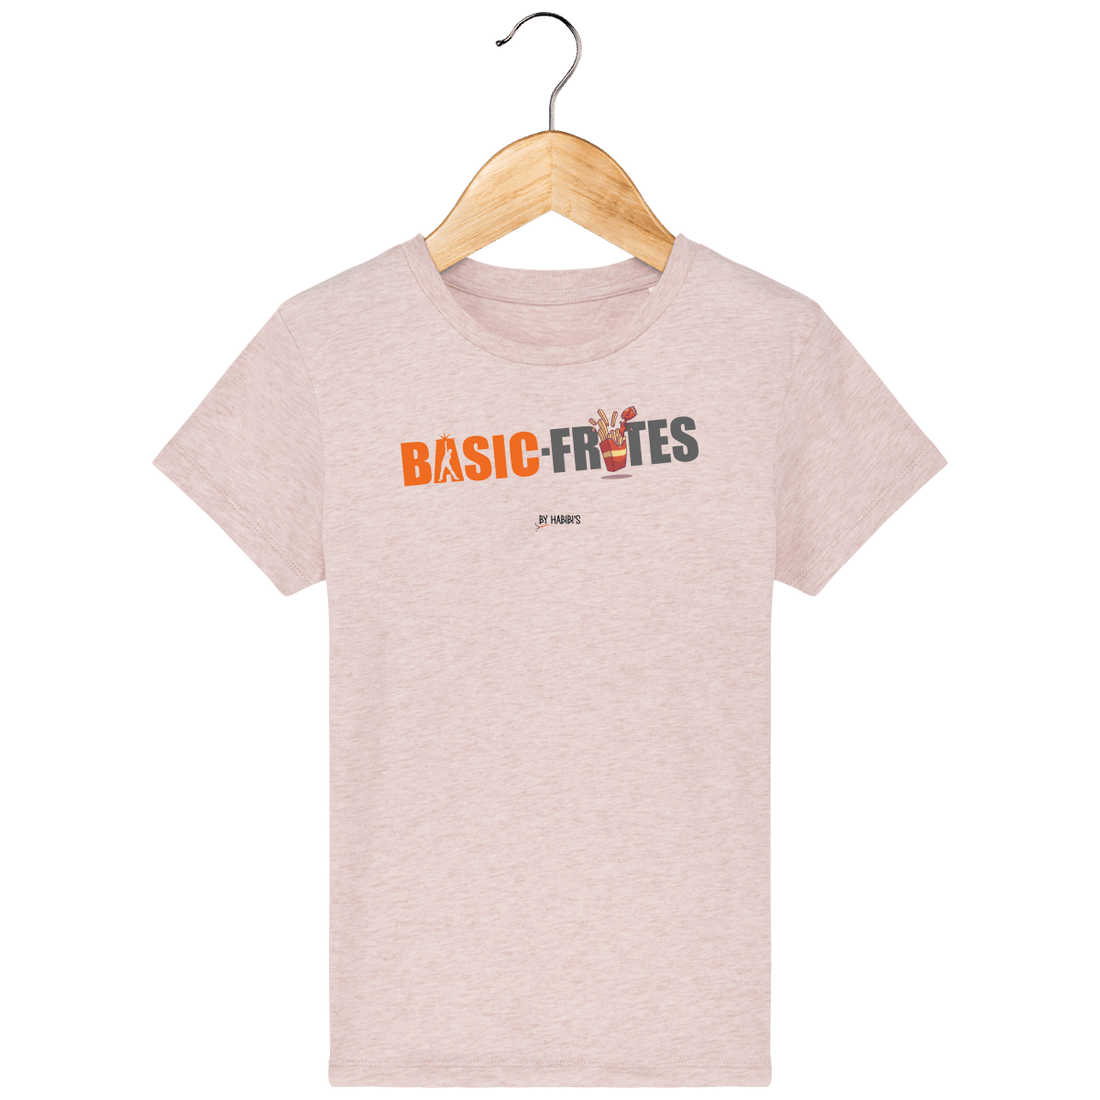 Enfant & Bébé>Tee-shirts - T-shirt Enfant <br> Basic Frites